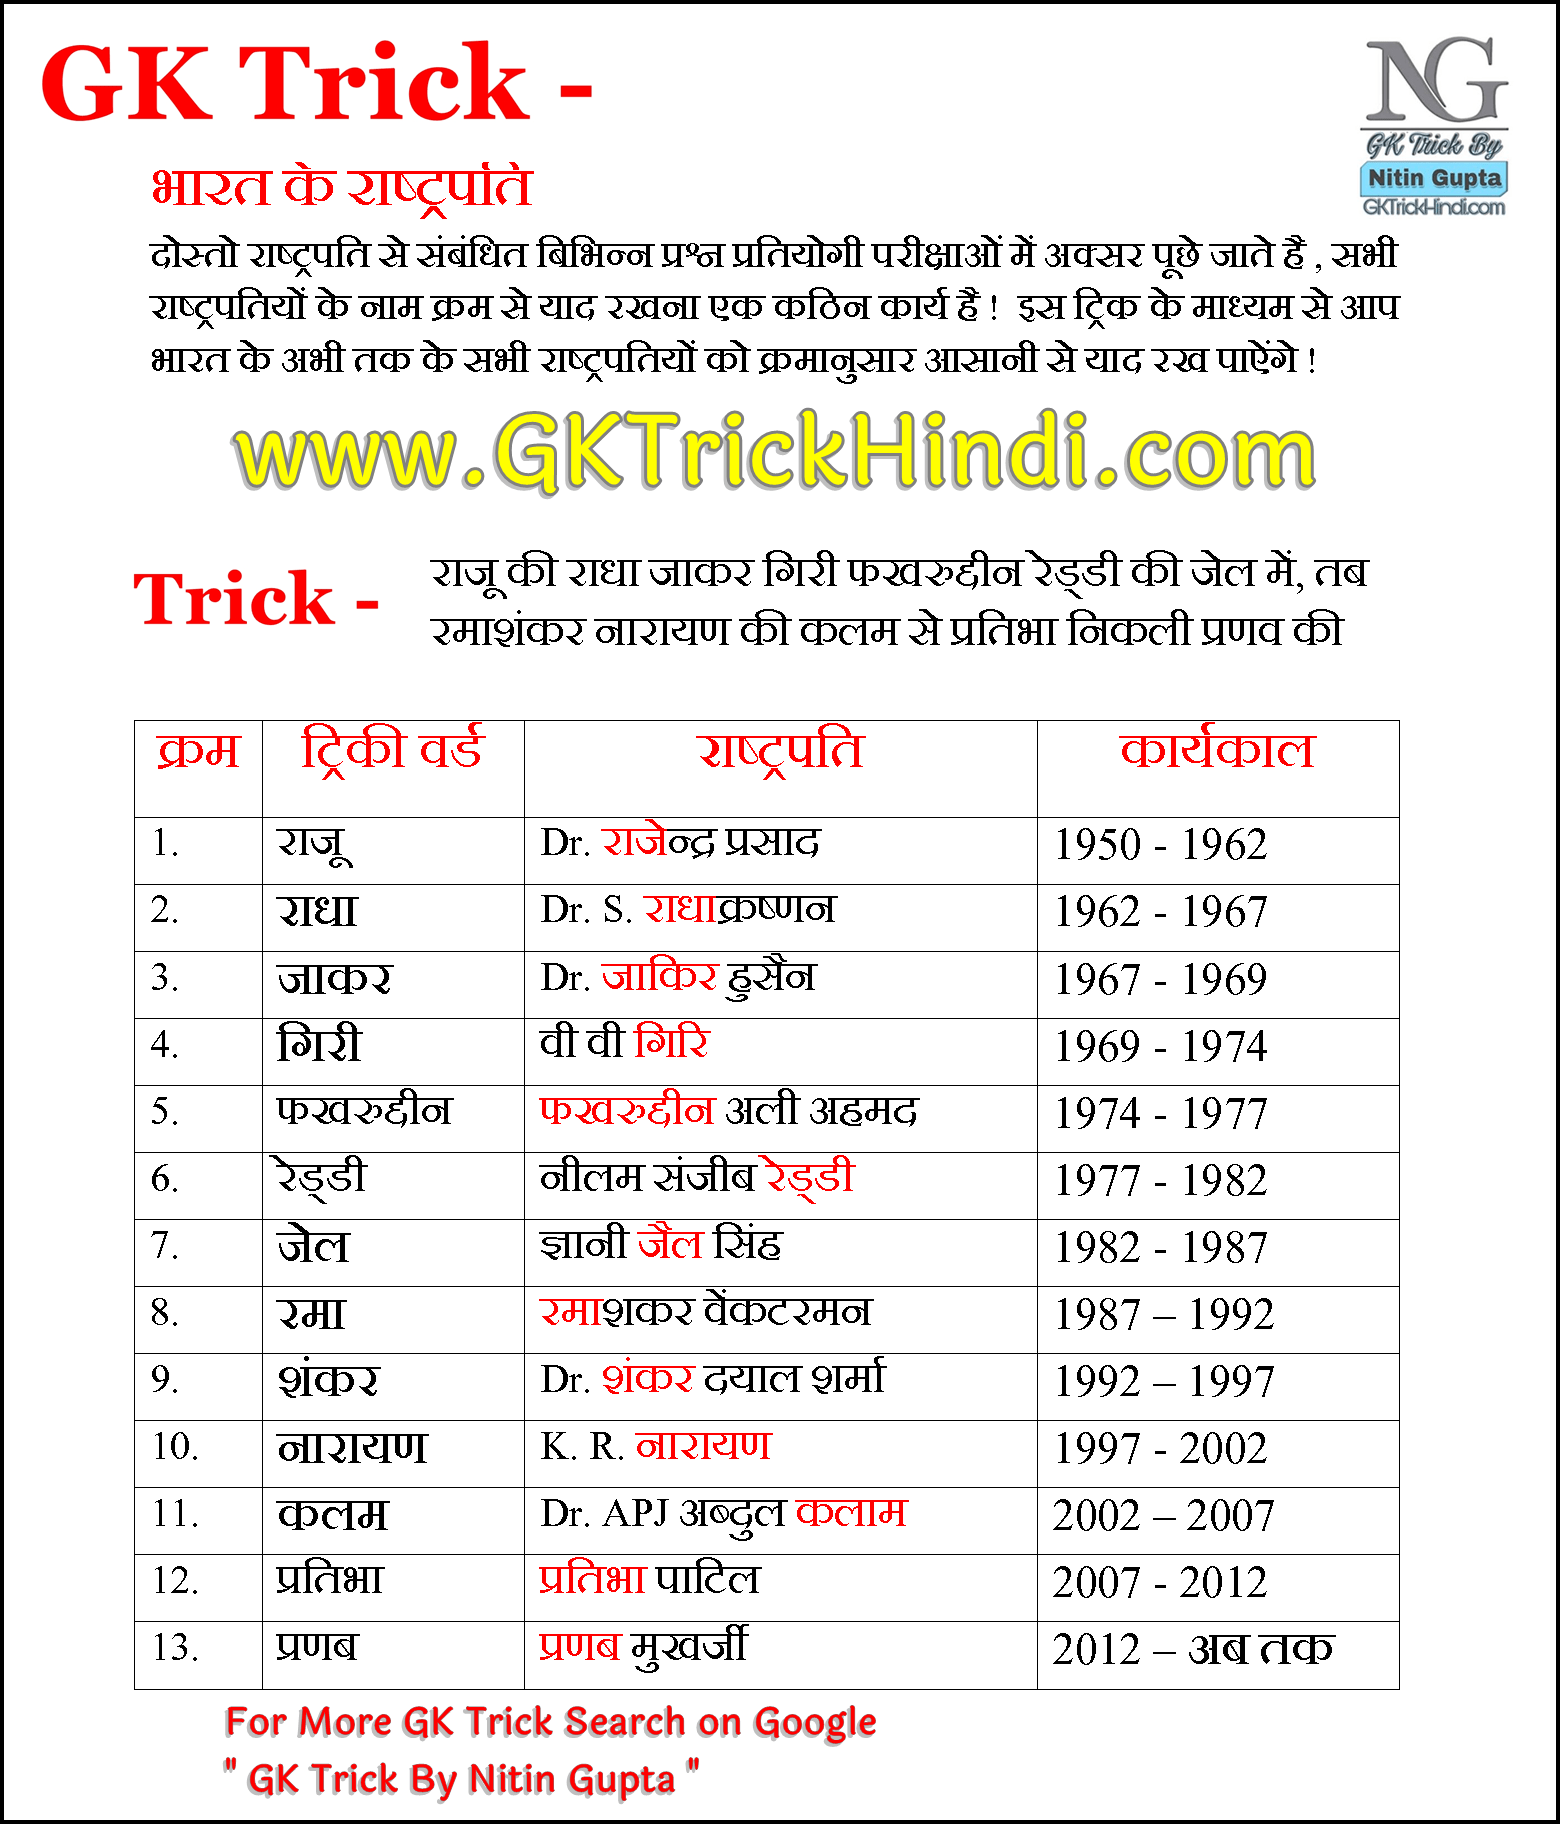 GK Trick By Nitin Gupta - President of India List